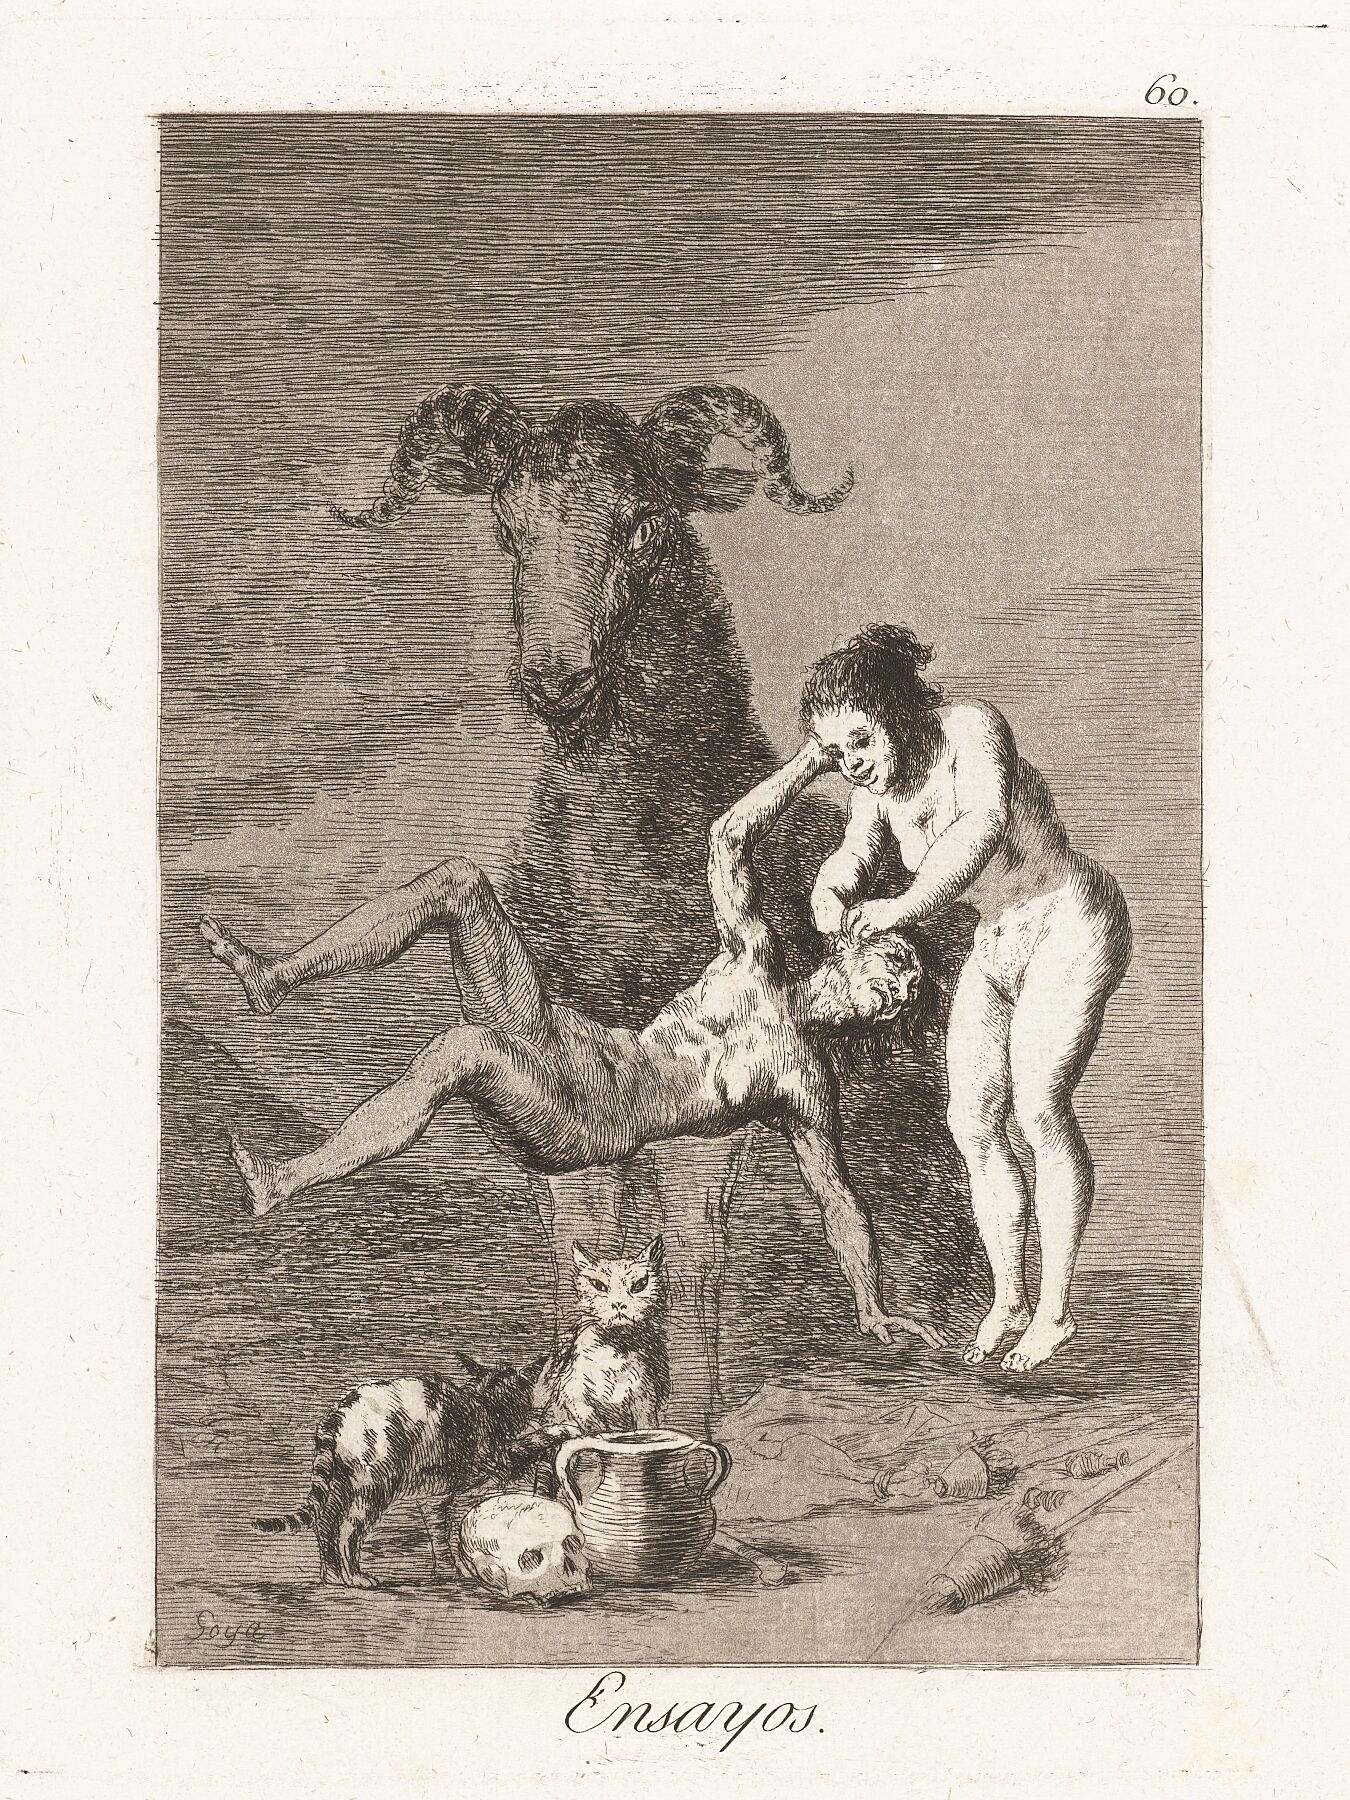 Trials by Francisco de Goya - 1797 - 1799